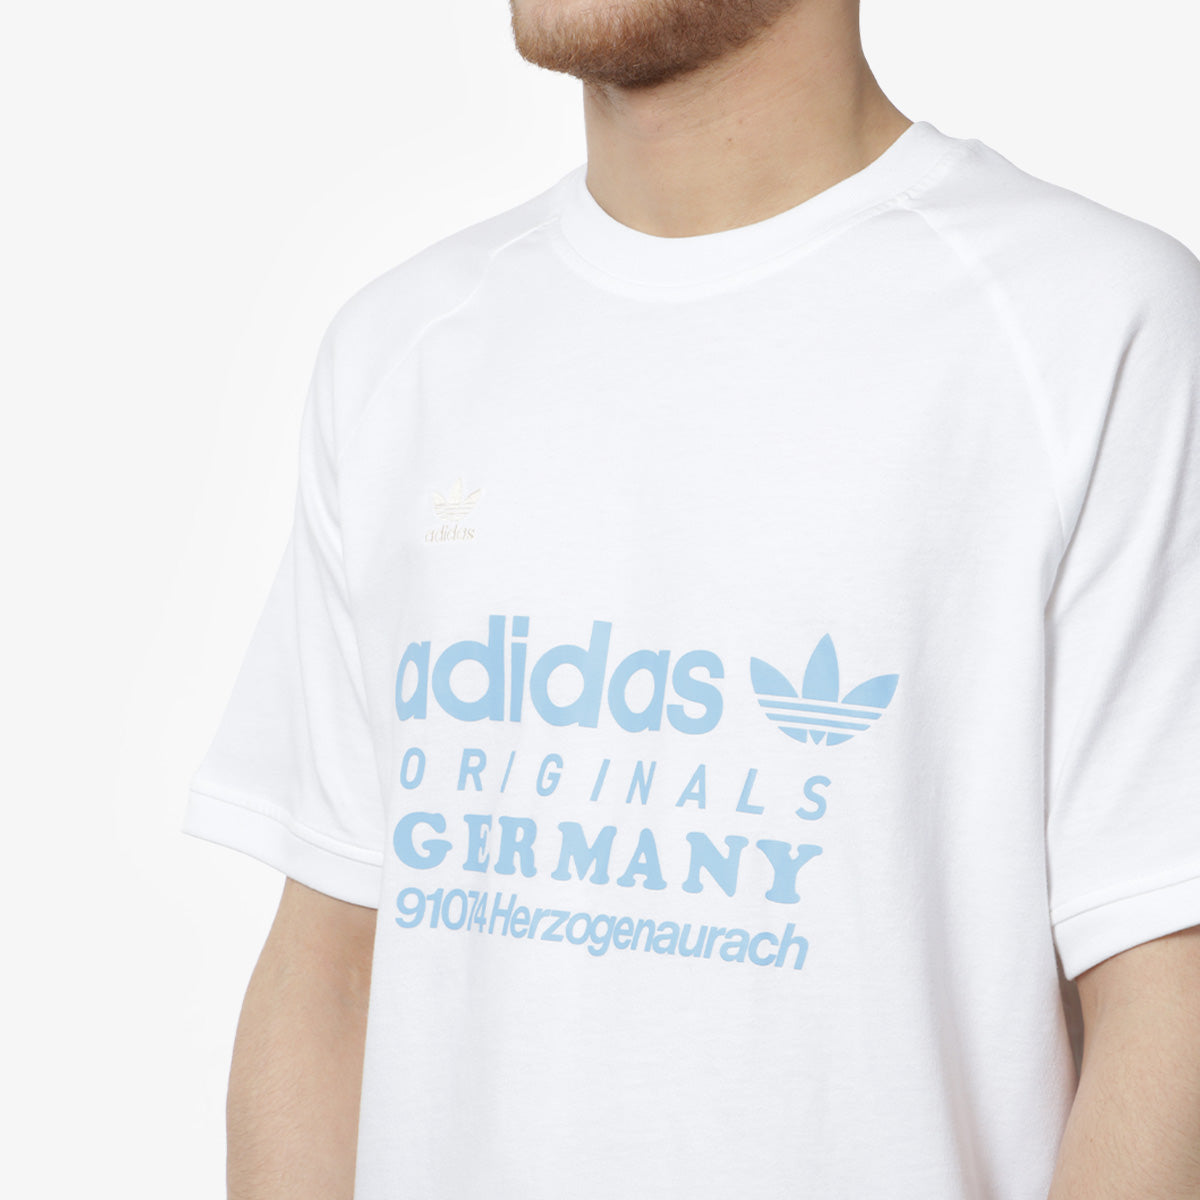 Adidas Originals GRF T-Shirt, White, Detail Shot 2